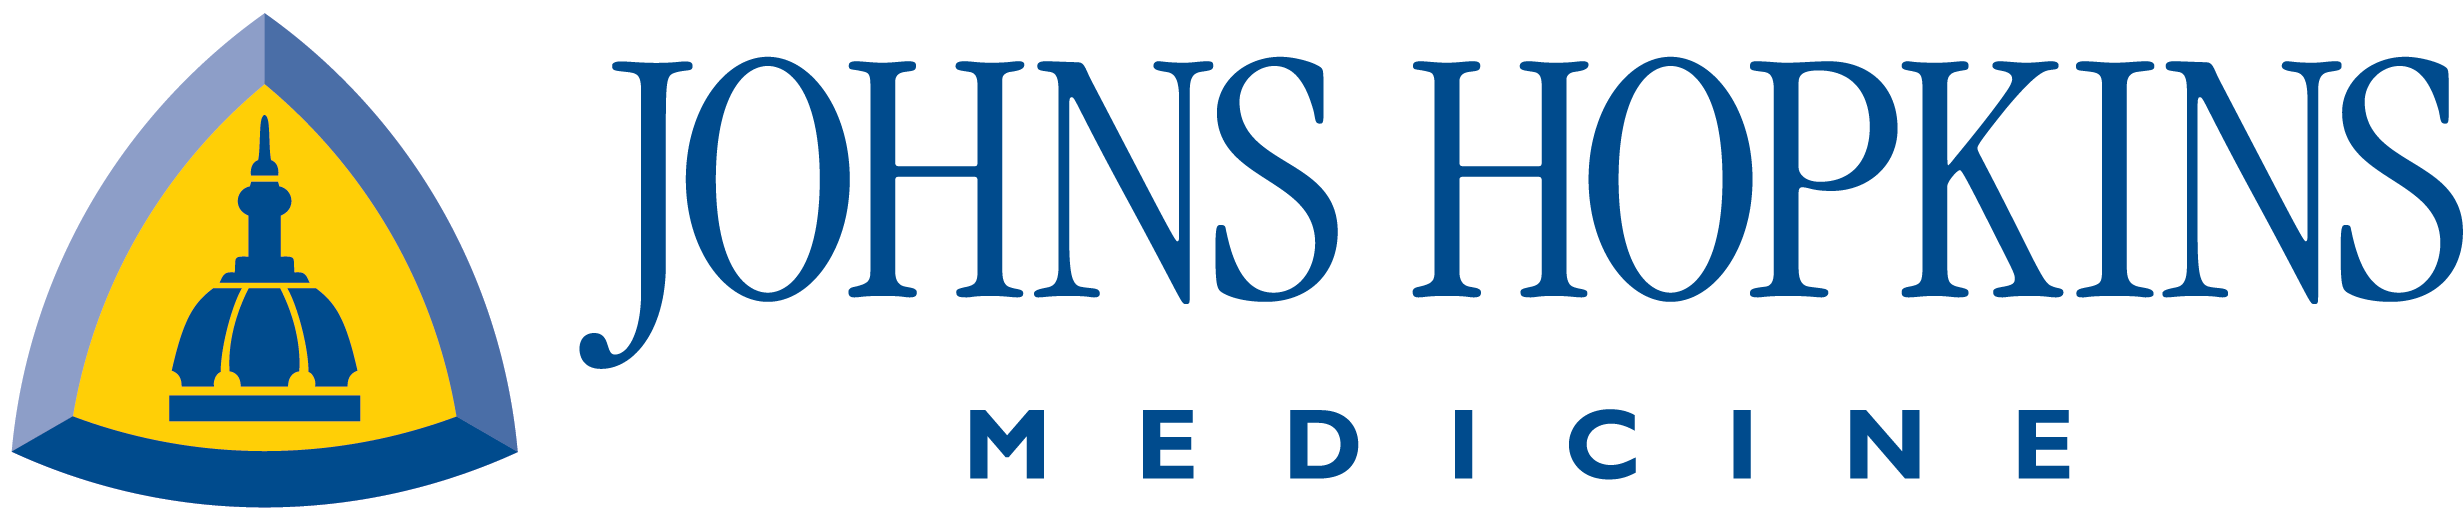 Johns Hopkins Medicine Logo 